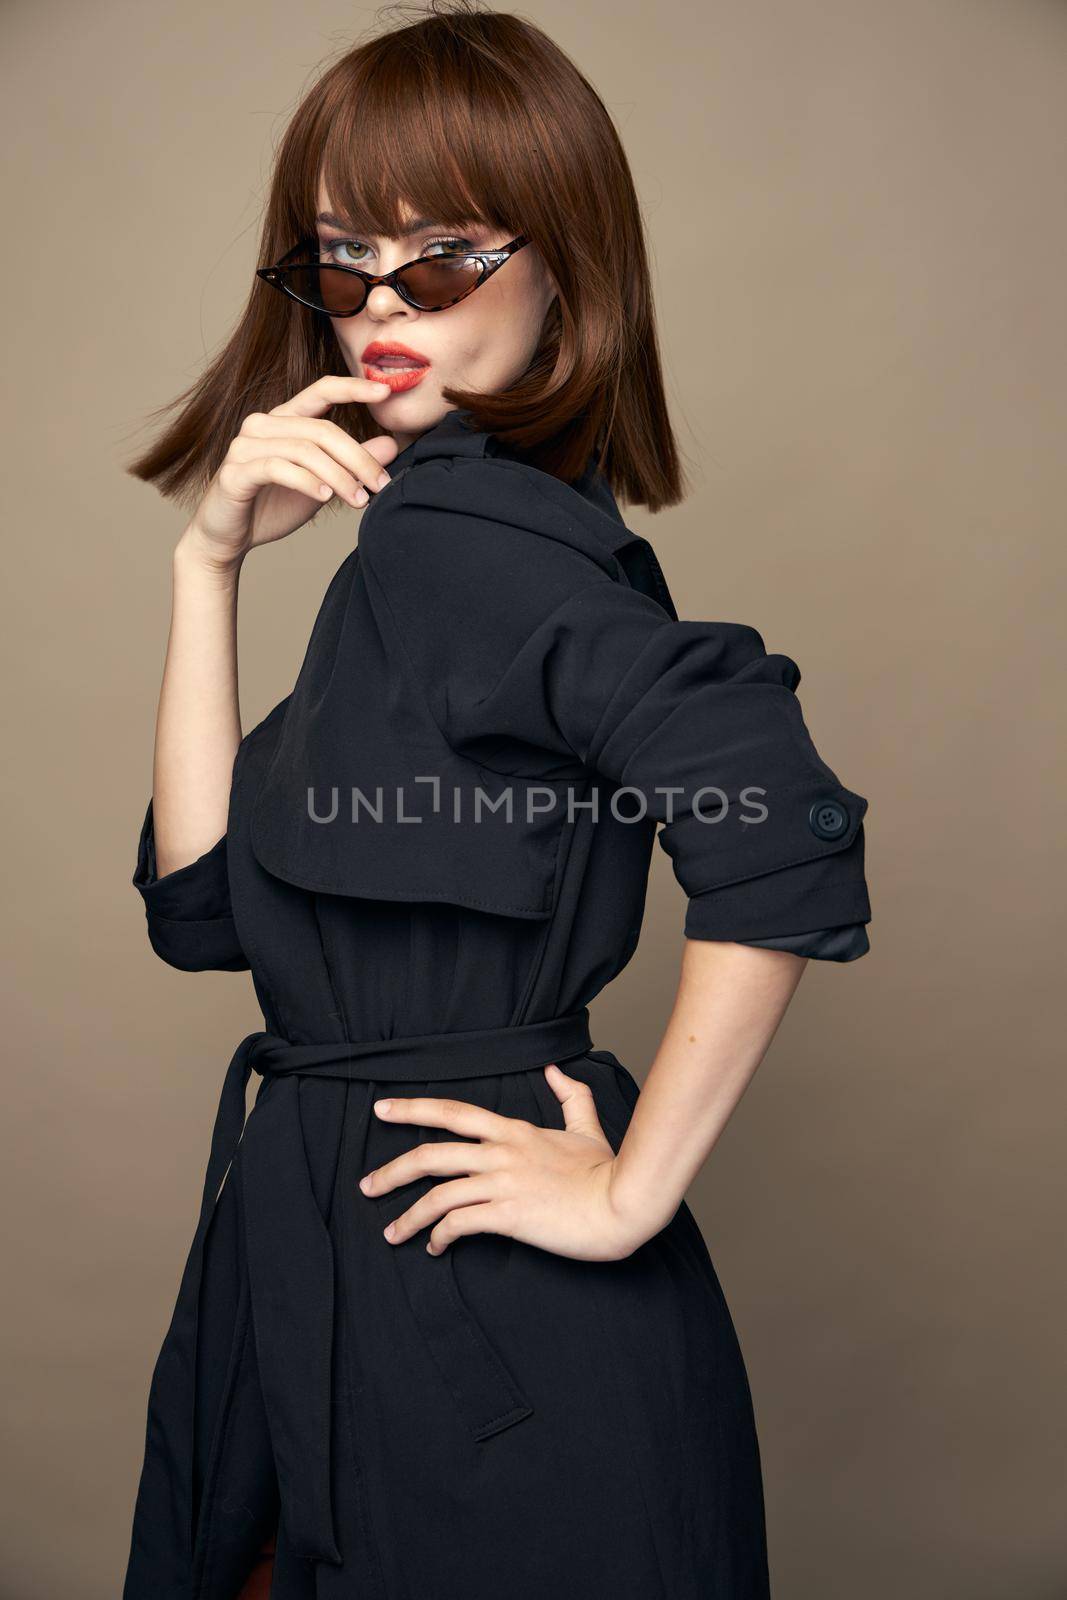 Fashionable woman Black coat and passionate look dark glasses studio